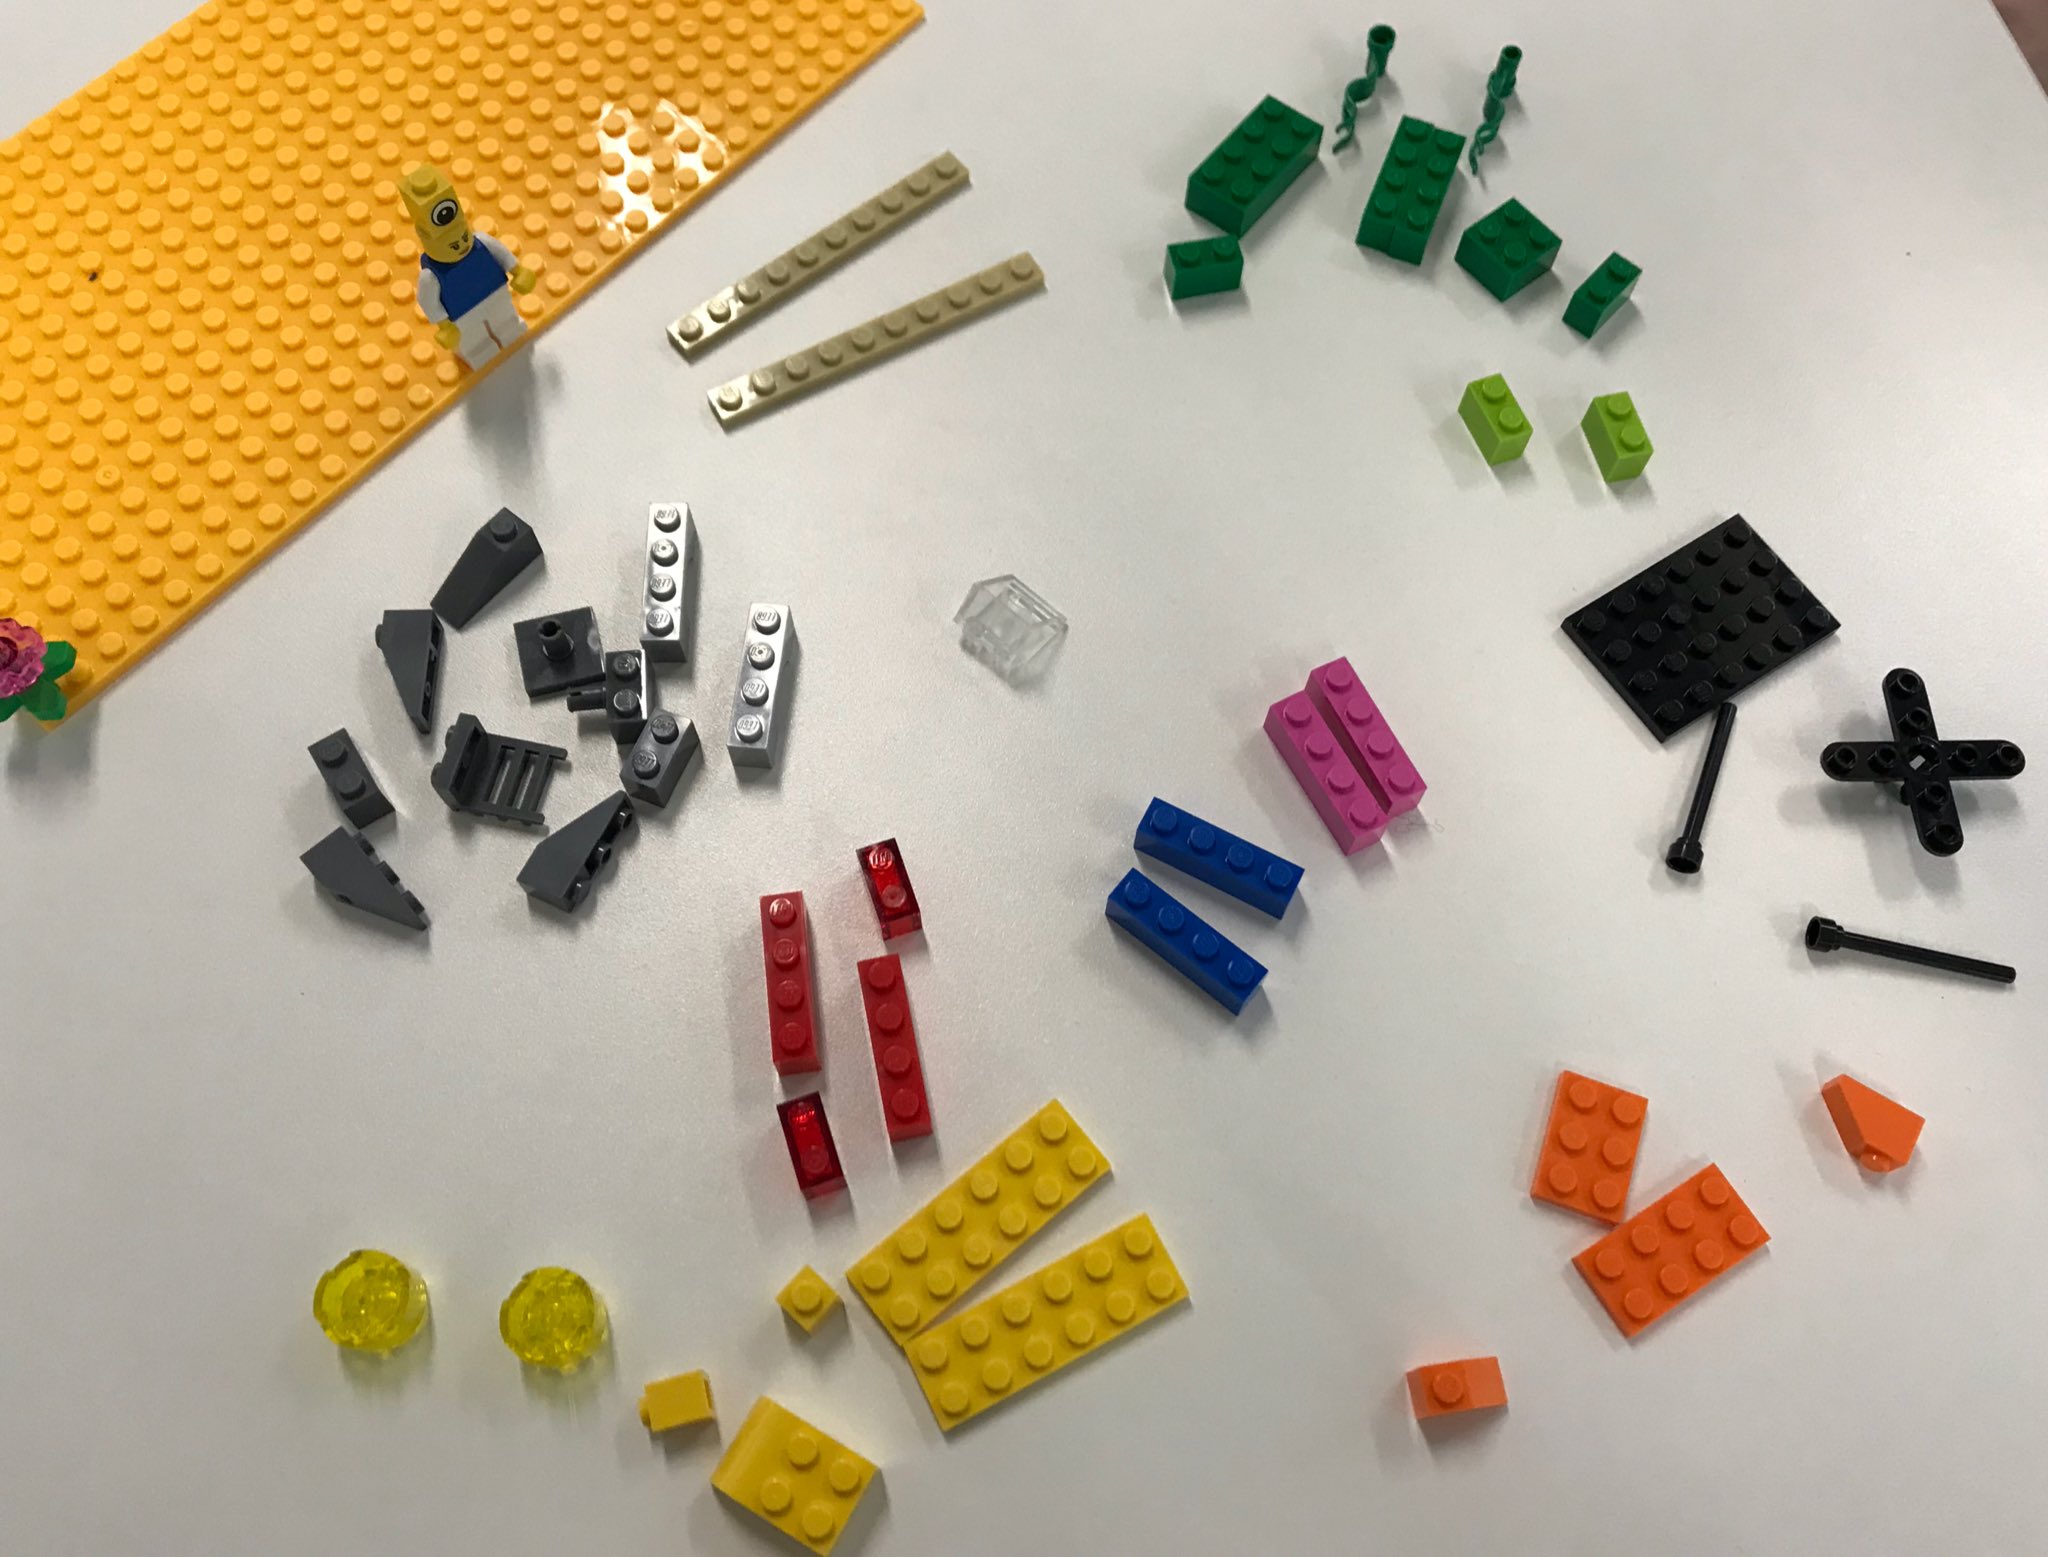 Colour coded Lego #SocMedHE17 #itsgettingserious #seriousplay #lego https://t.co/x406VWnmPi